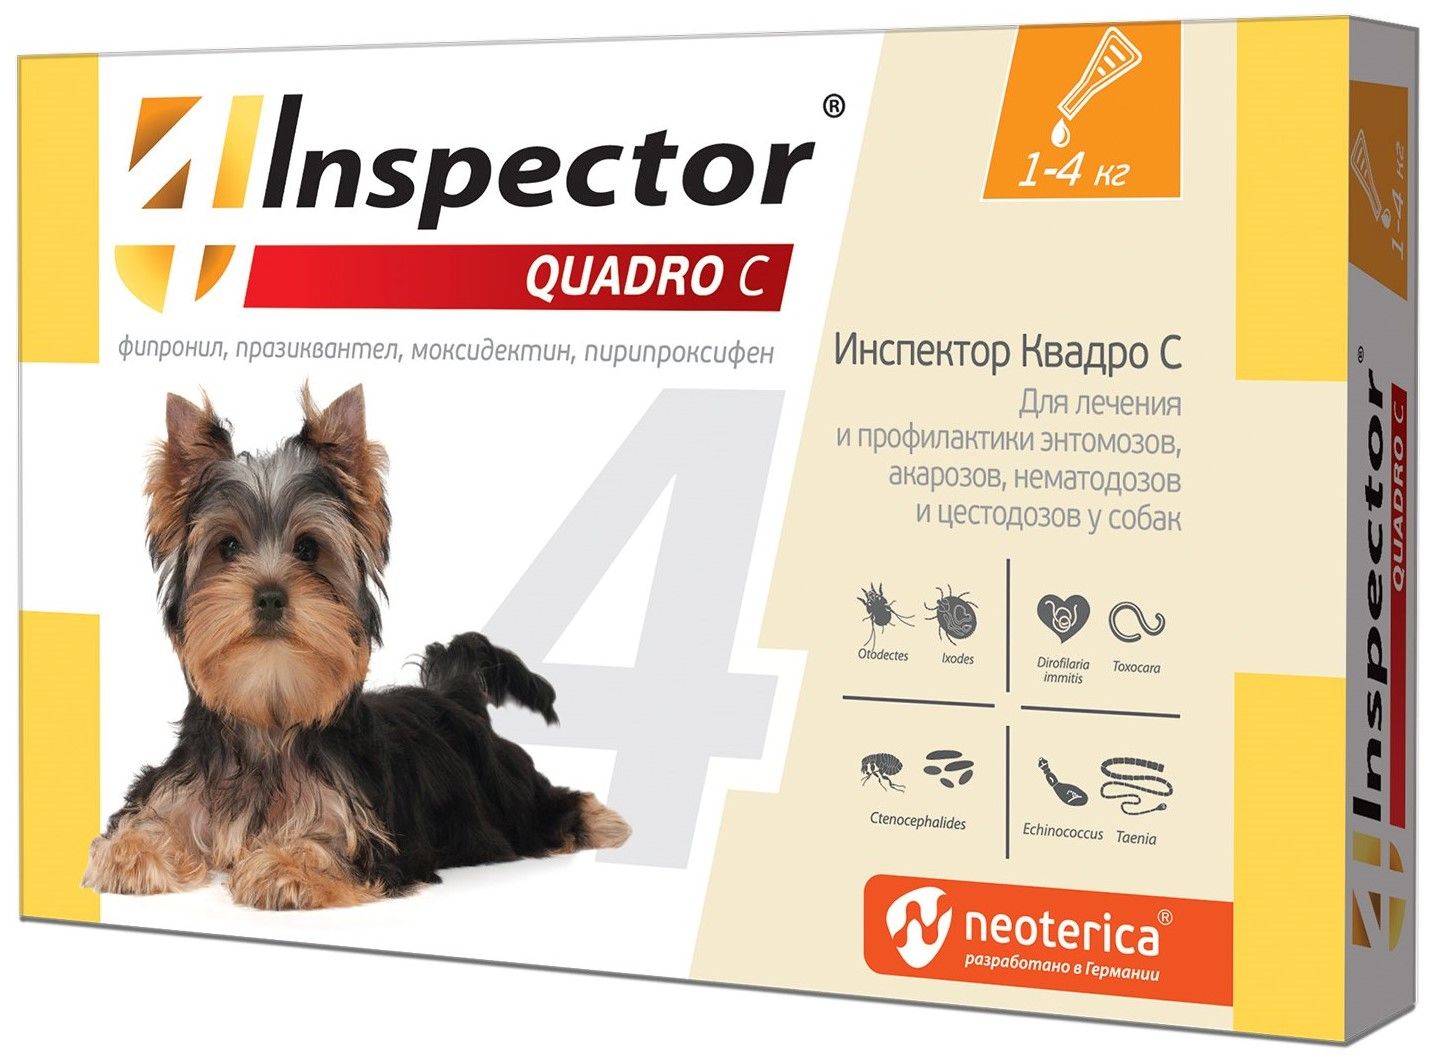  Инспектор Quadro С капли на холку для собак 1-4 кг цена за 1 пипетку для питомцев
